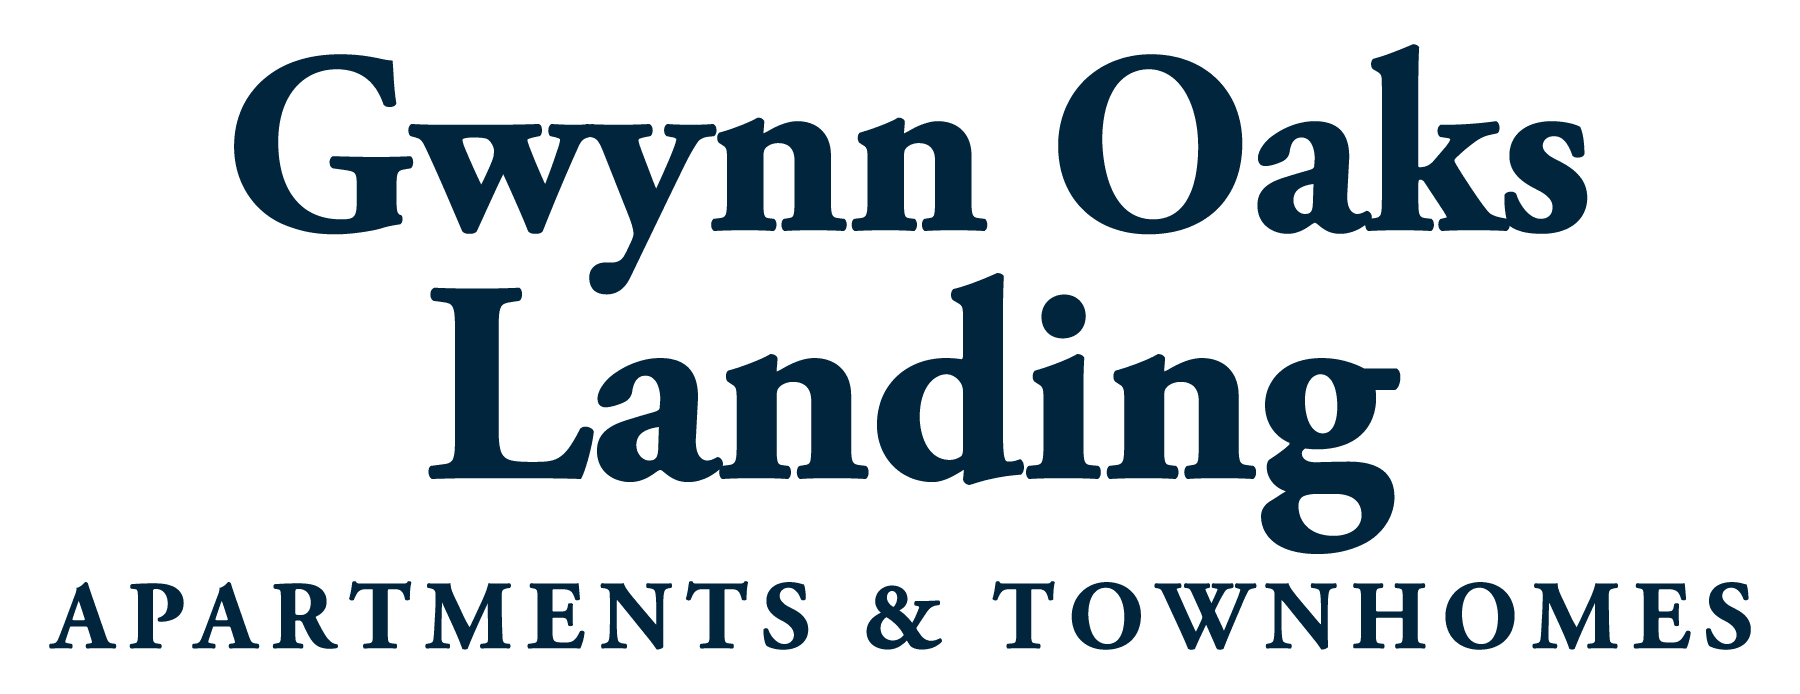 Gwynn Oaks Landing Apartments & Townhomes